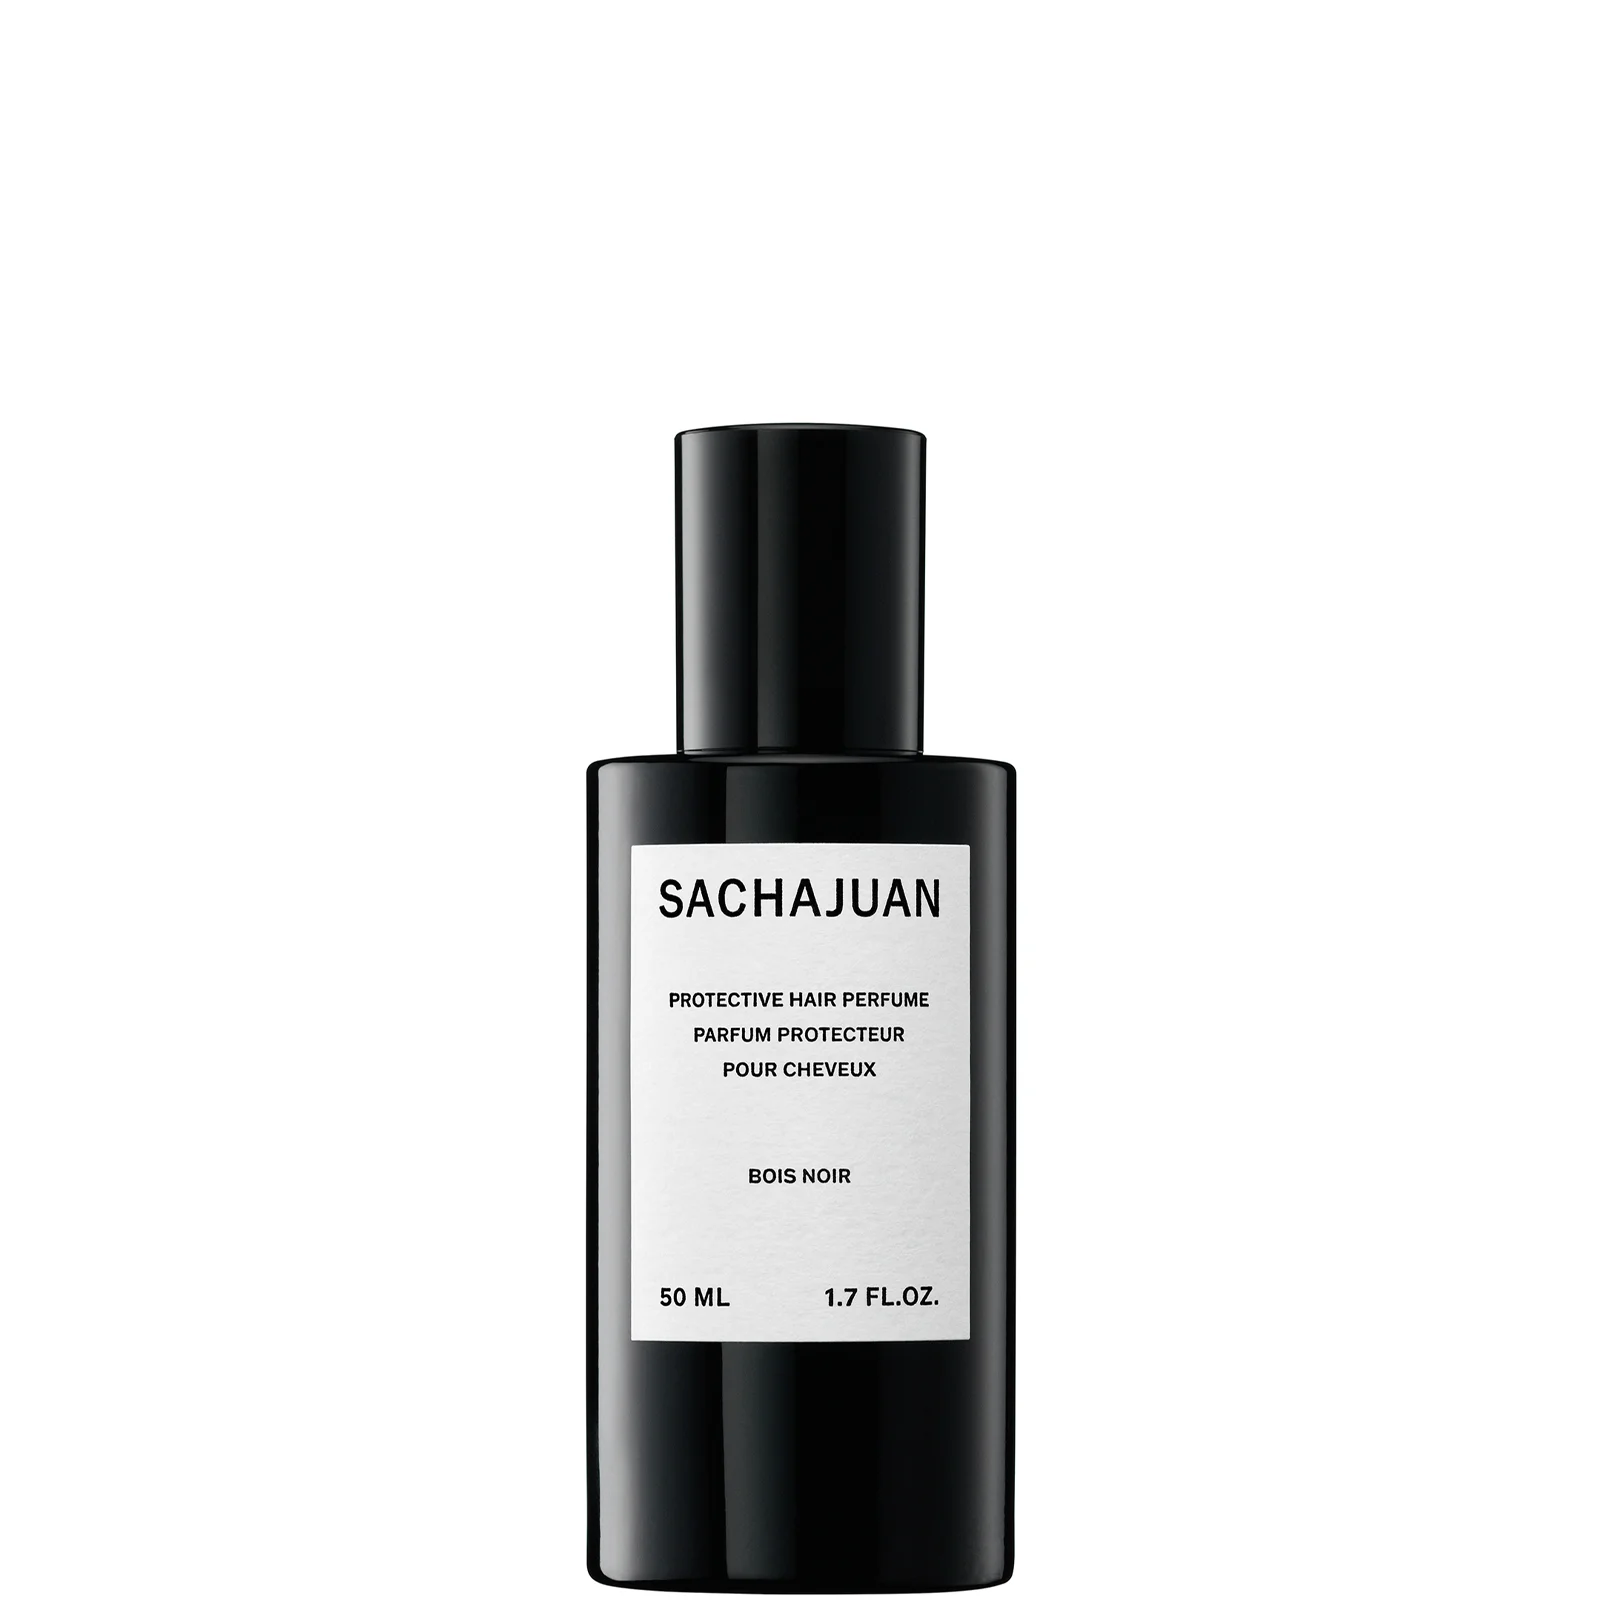 Sachajuan Protective Hair Perfume 50ml Image 1